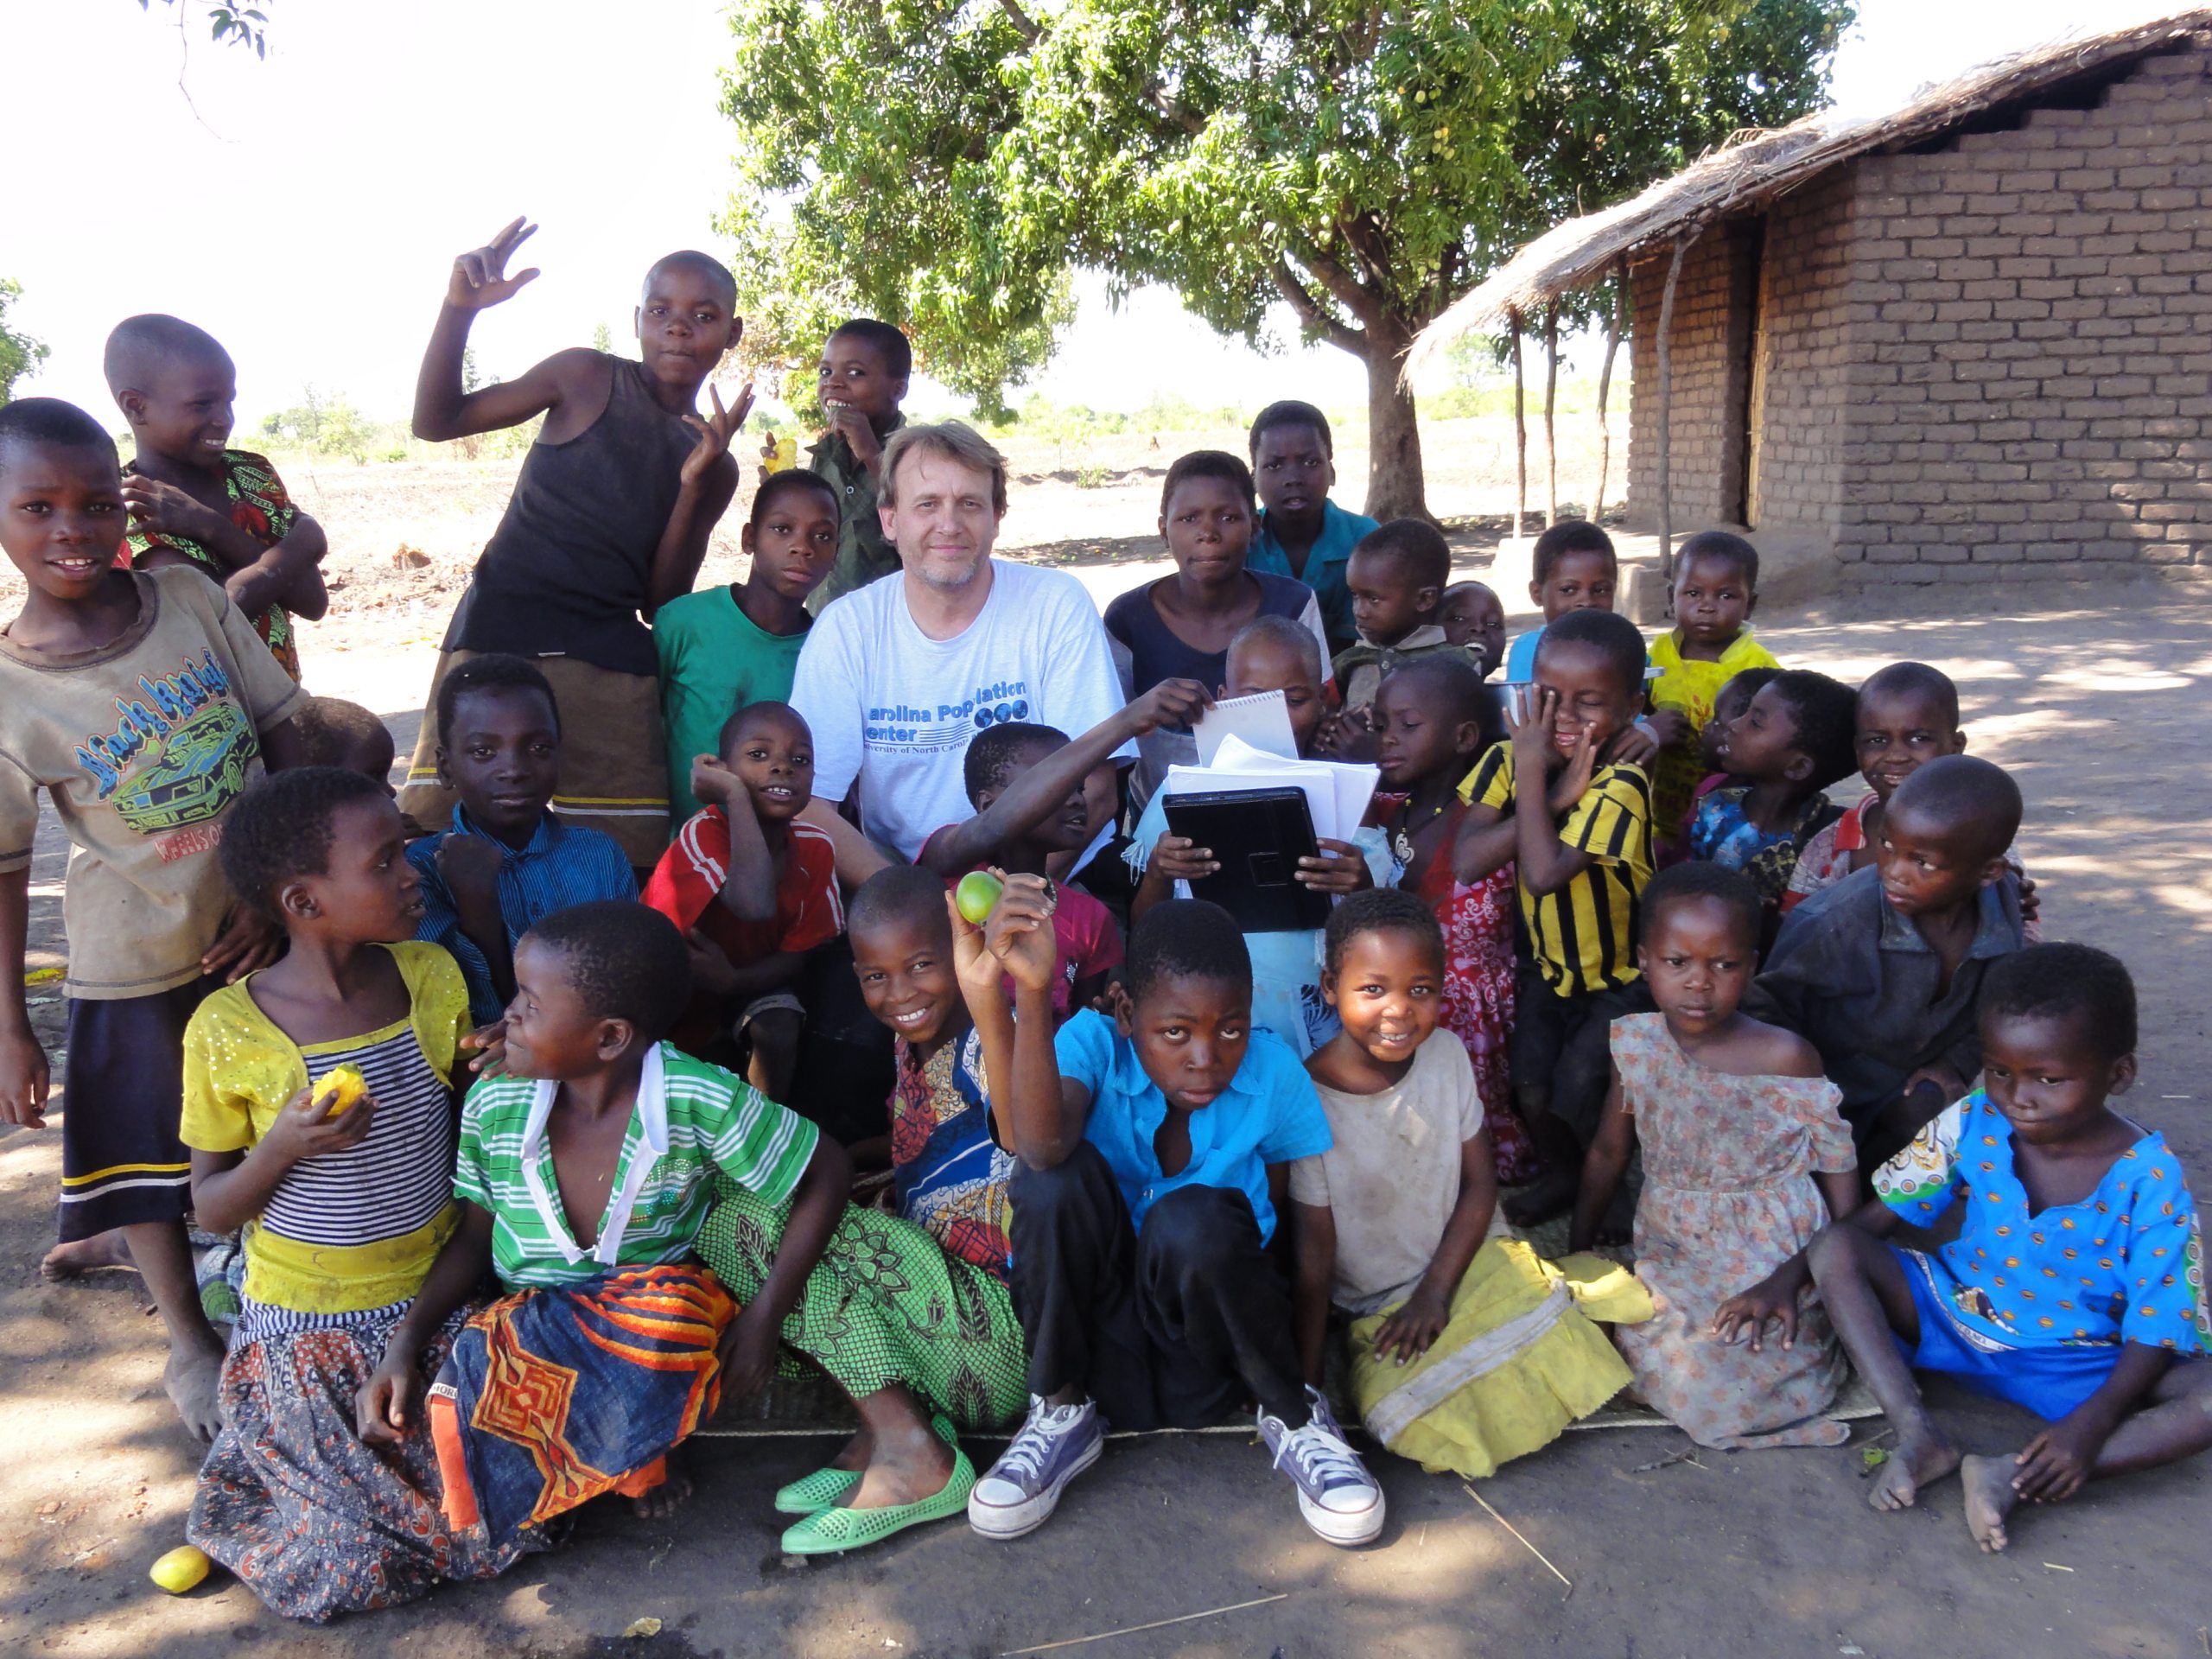 White man posing with two dozen Black children in Malawi.